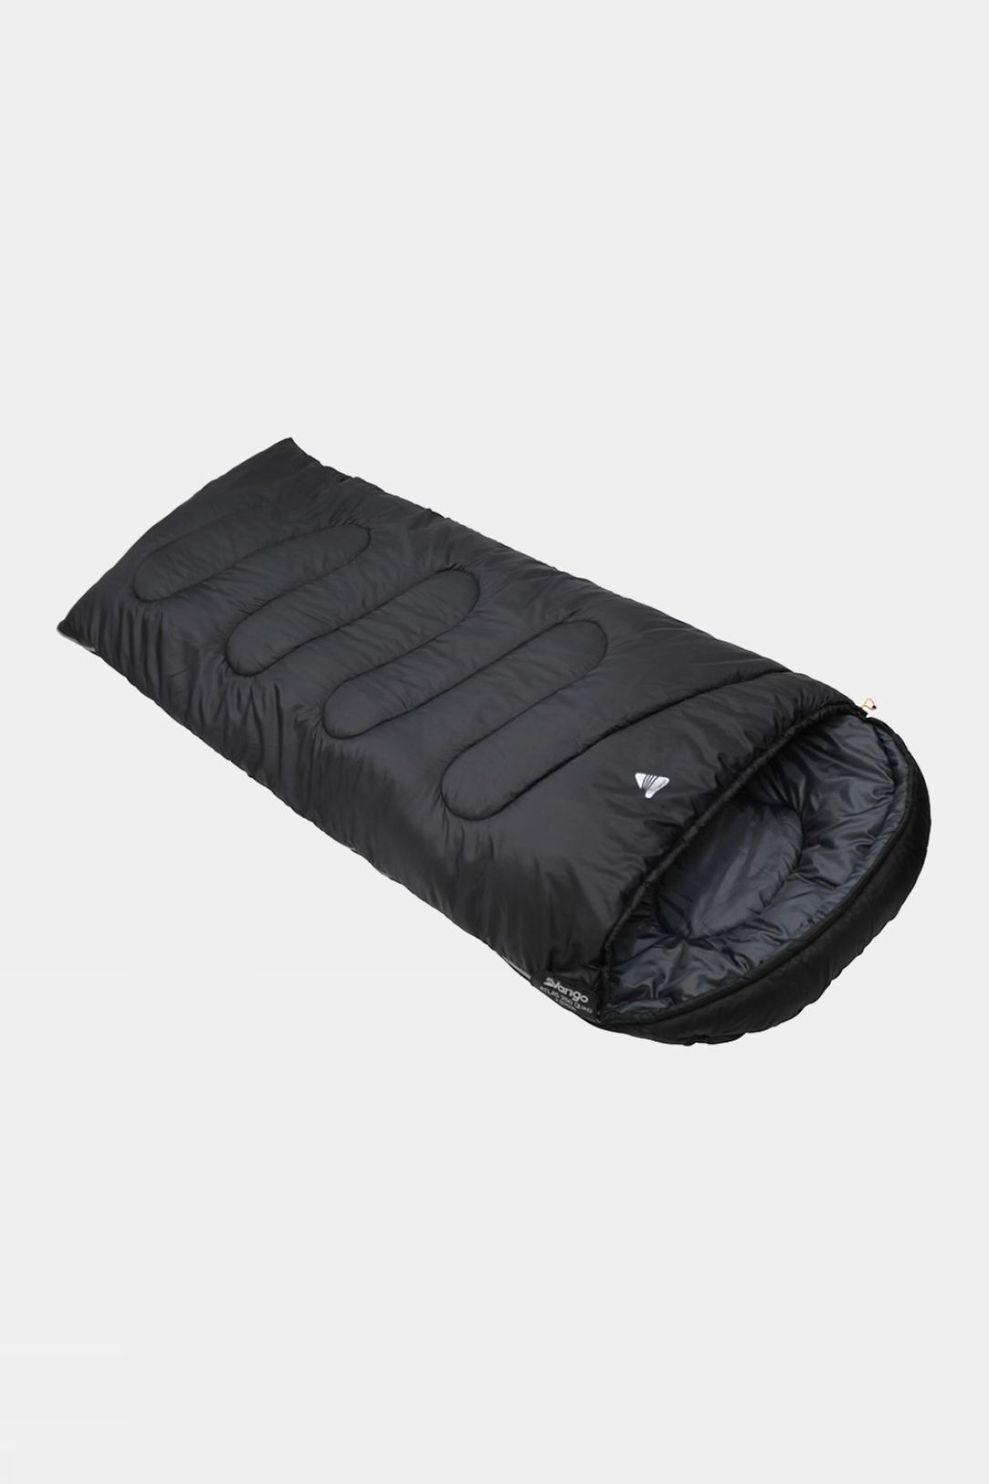 Vango Atlas 250 Quad Sleeping Bag